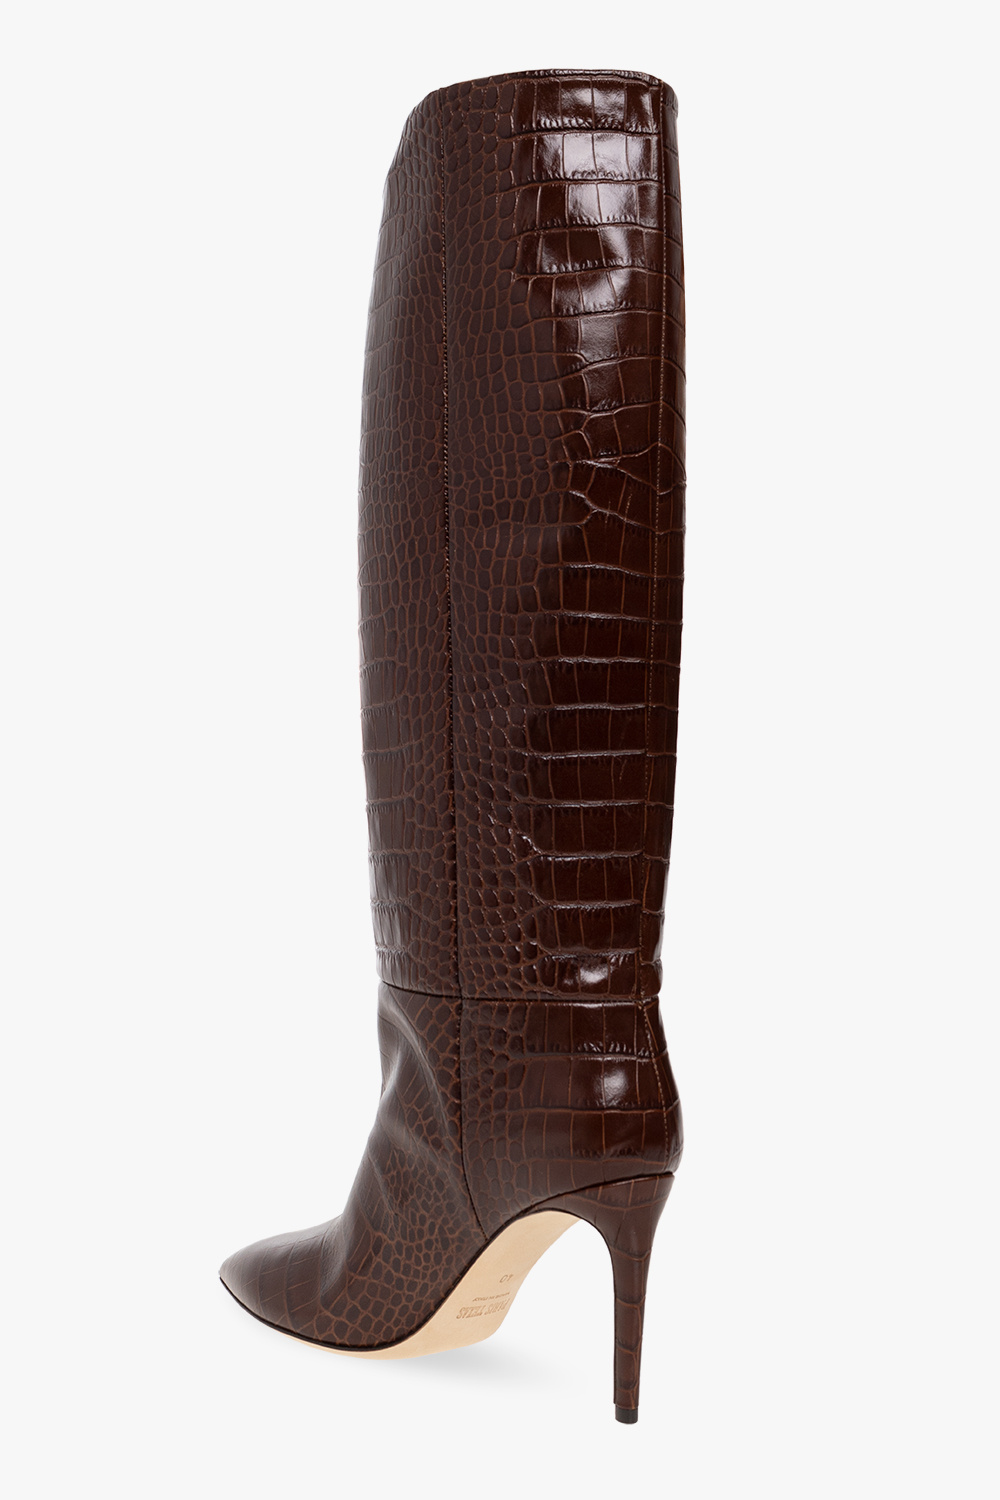 Paris Texas Leather heeled knee-high travel